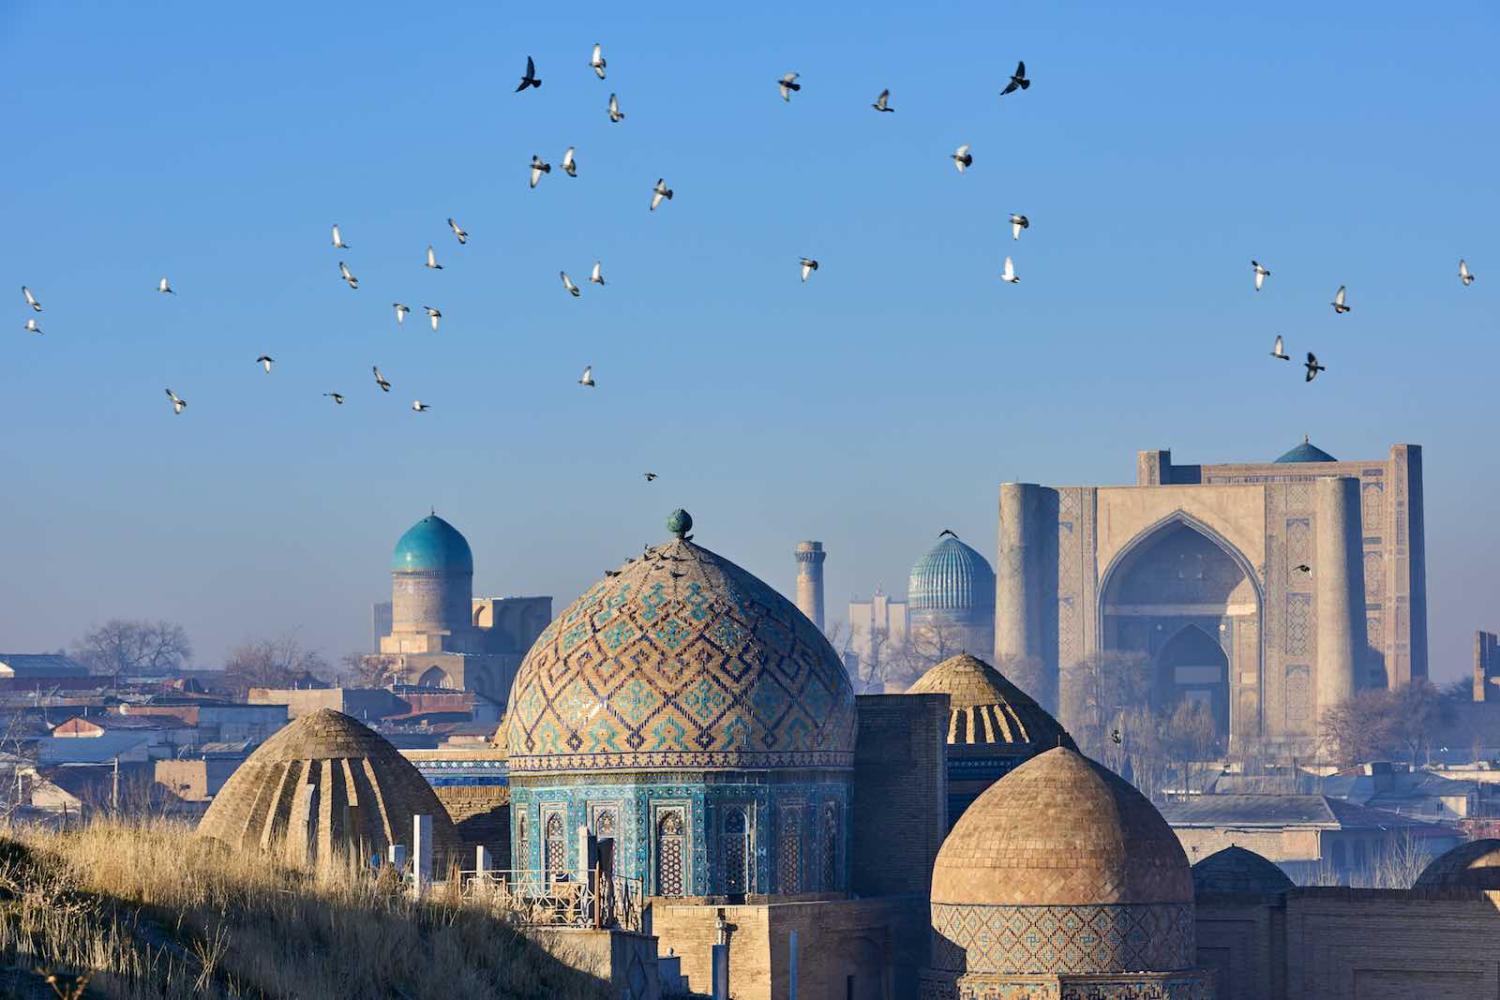 Shah-i-Zinda necropolis in Samarkand, Uzbekistan (Getty Images)